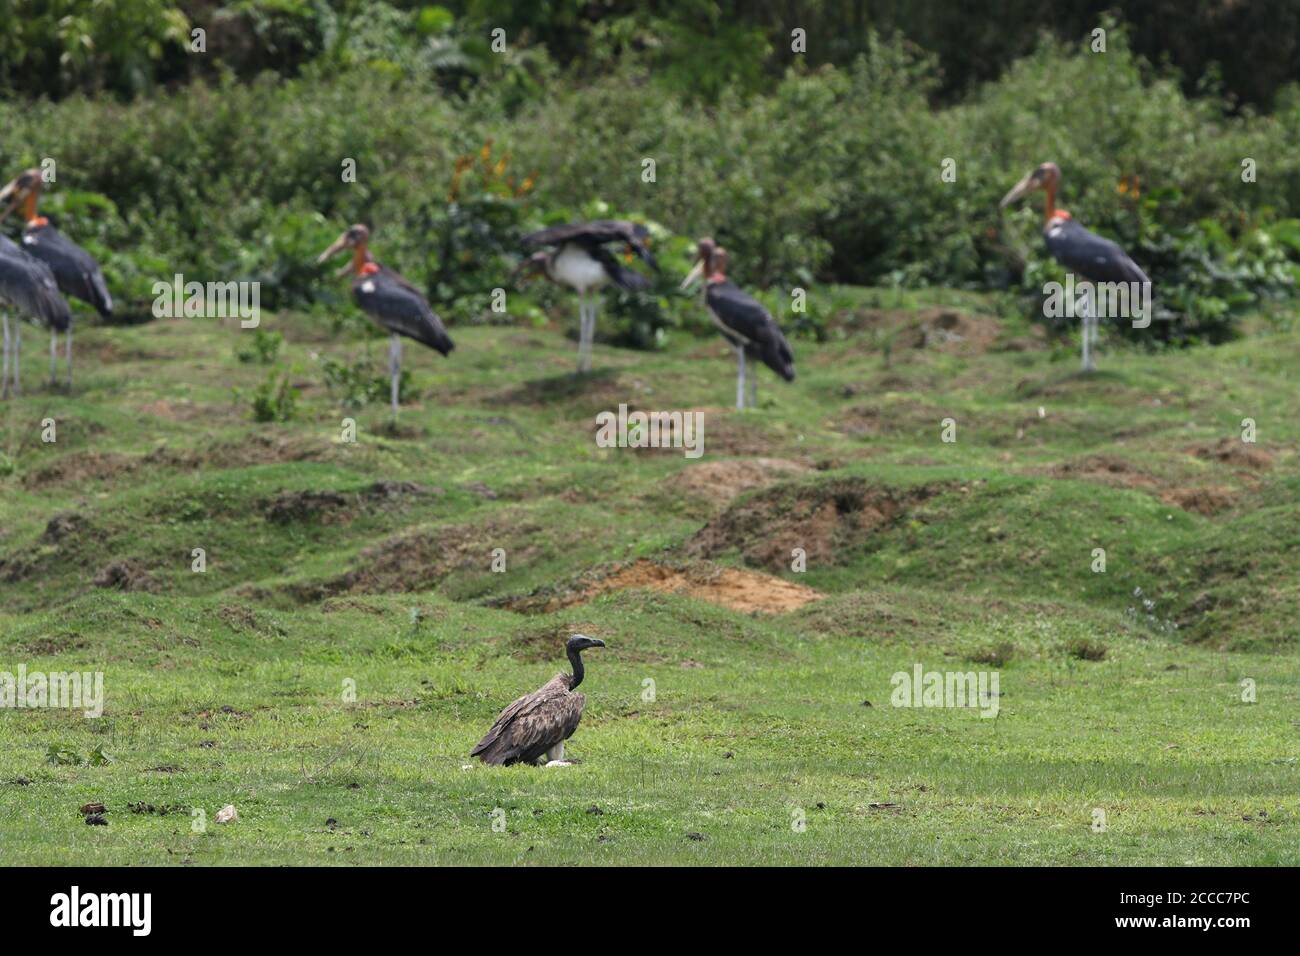 Slender-billed Vulture (Gyps tenuirostris) with Greater Adjutant (Leptoptilos dubius) perched on the gras in Kaziranga NP Stock Photo